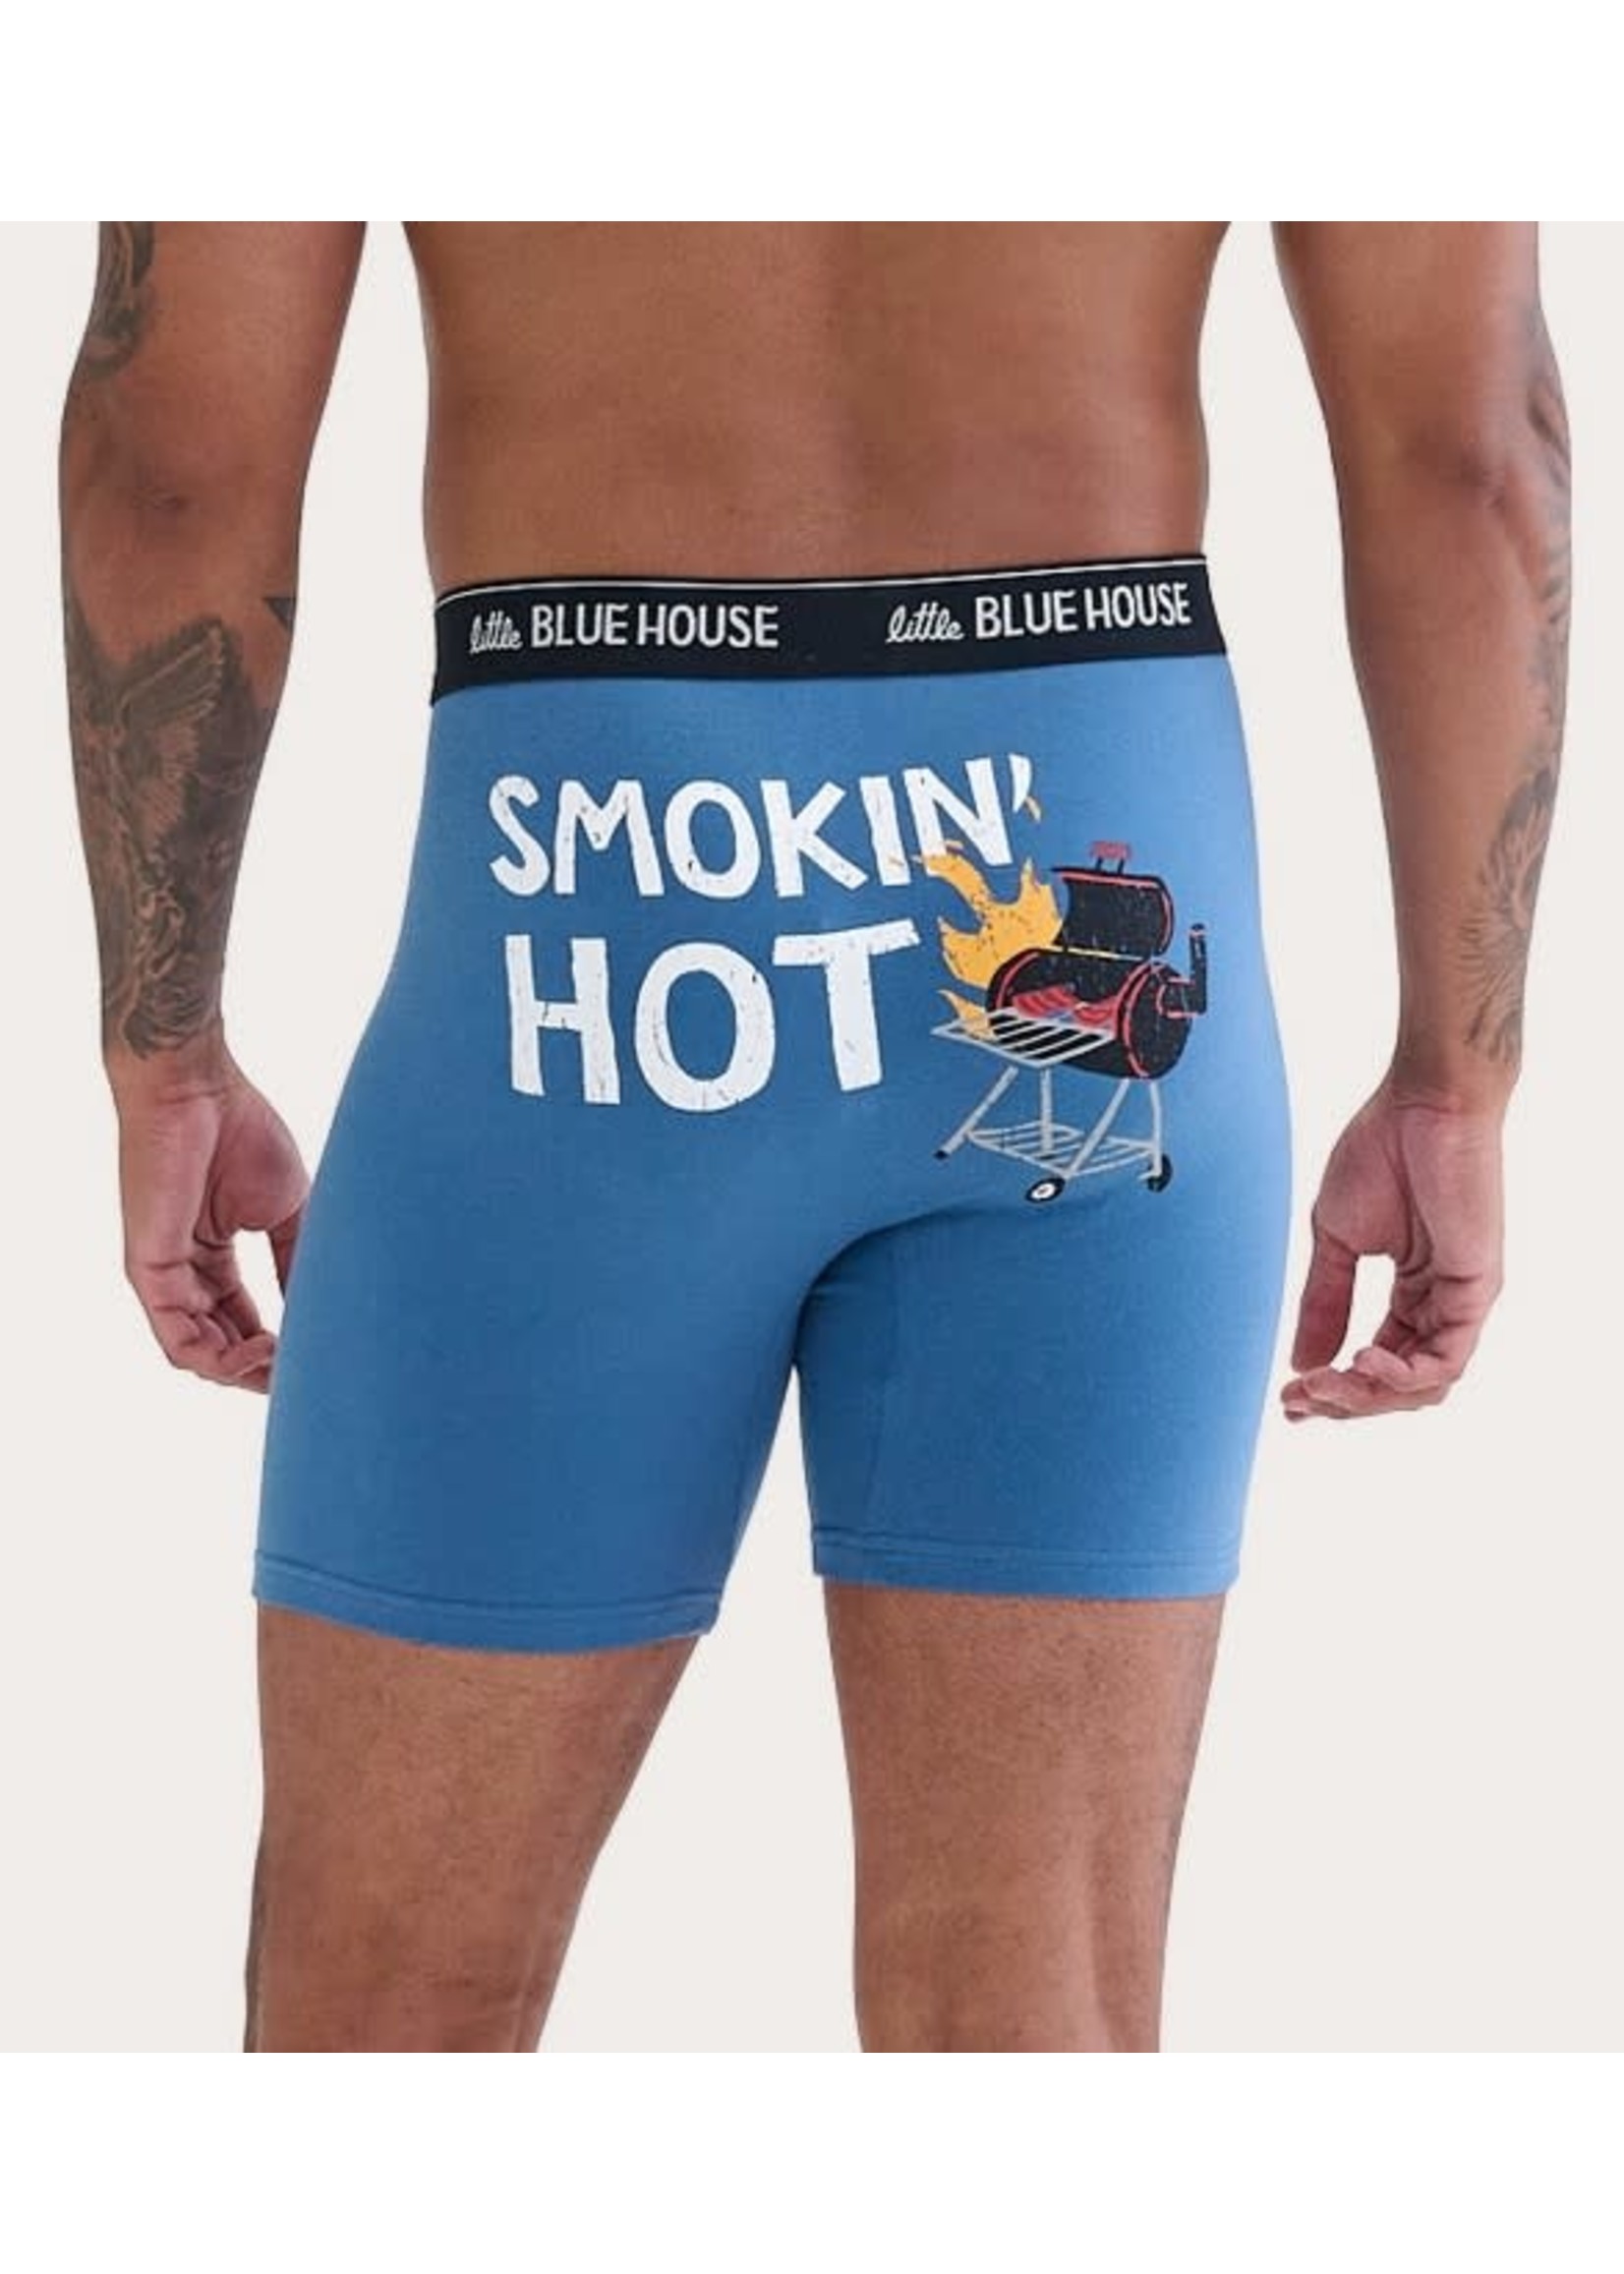 Little Blue House Smokin Hot Men's Boxer Brief